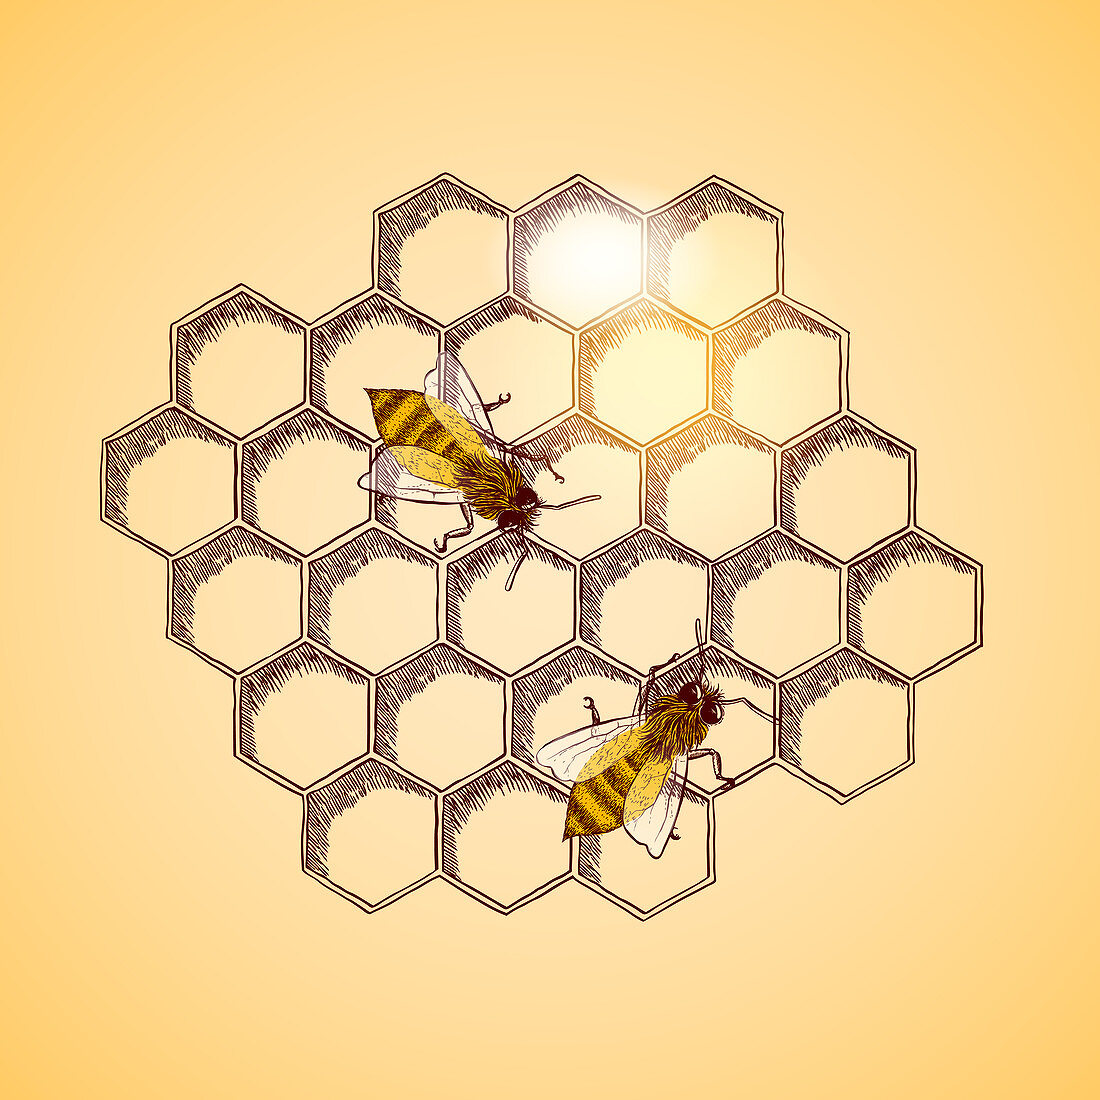 Honey bees and honeycomb background, illustration